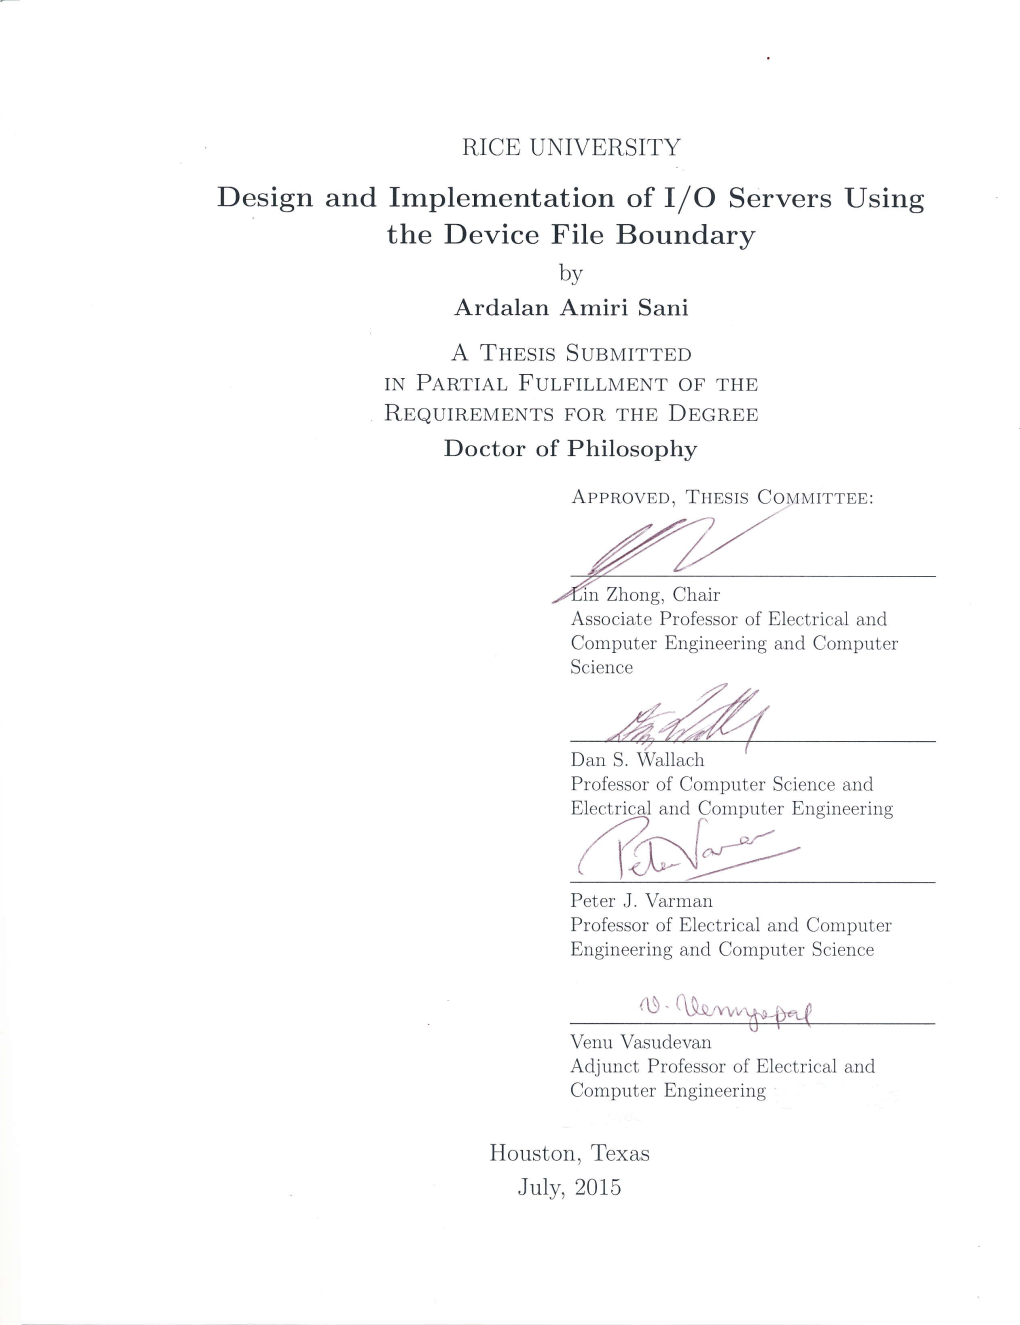 Implementation of I/O Servers Using